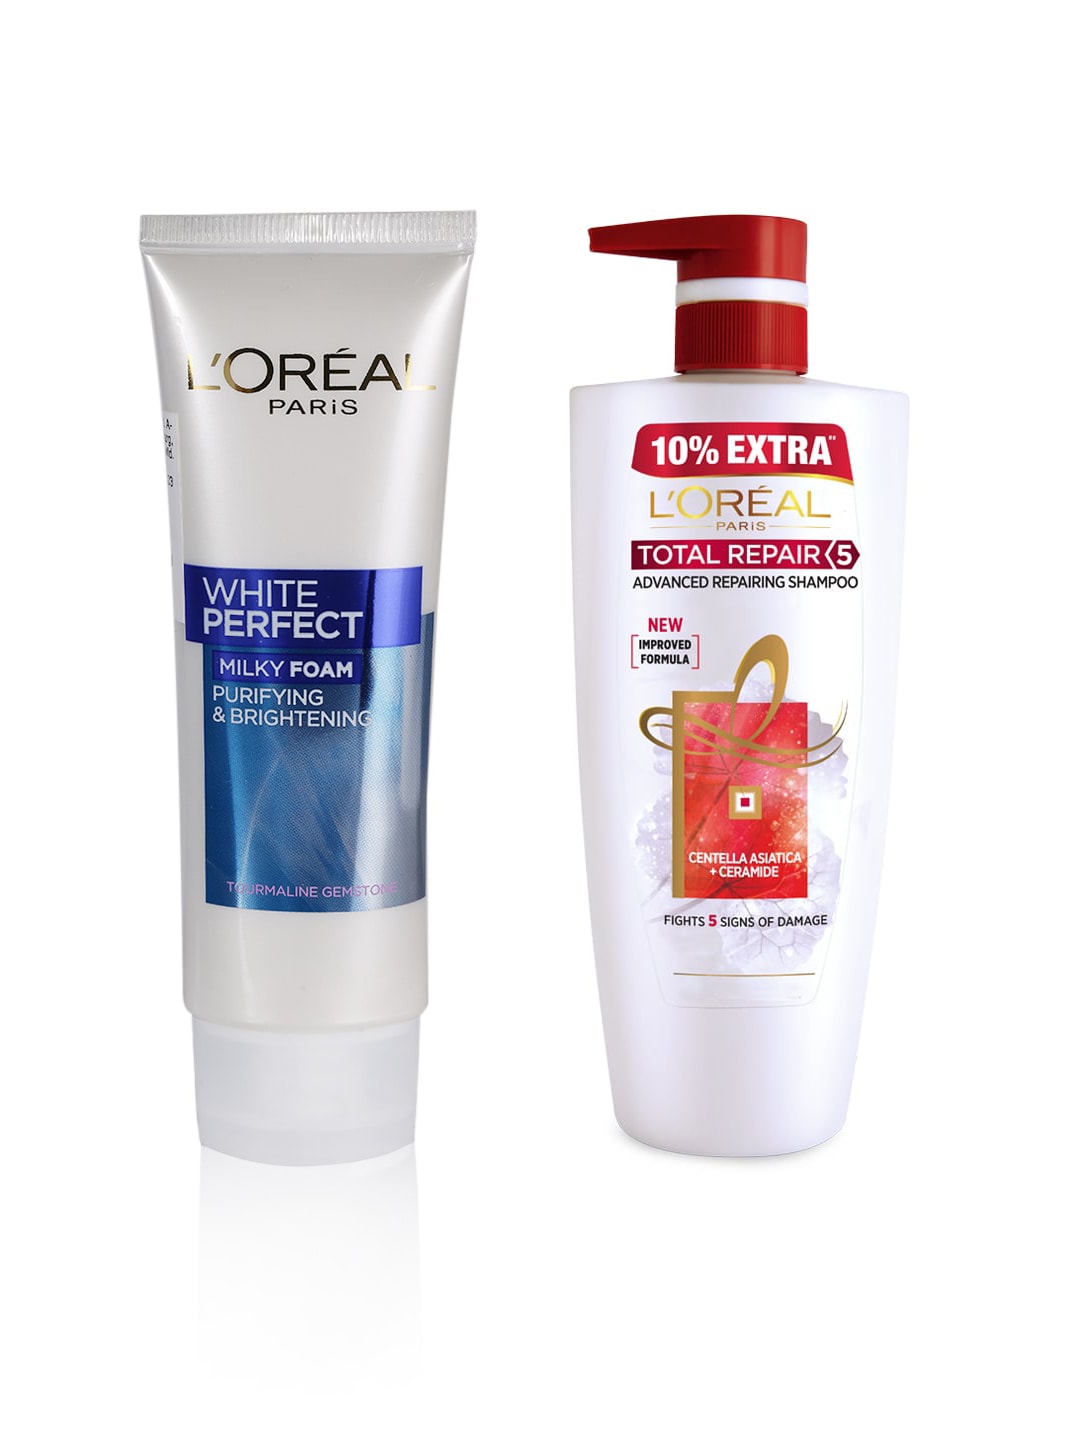 LOreal Paris Total Repair 5 Advanced Repairing Shampoo & White Perfect Face Wash Price in India